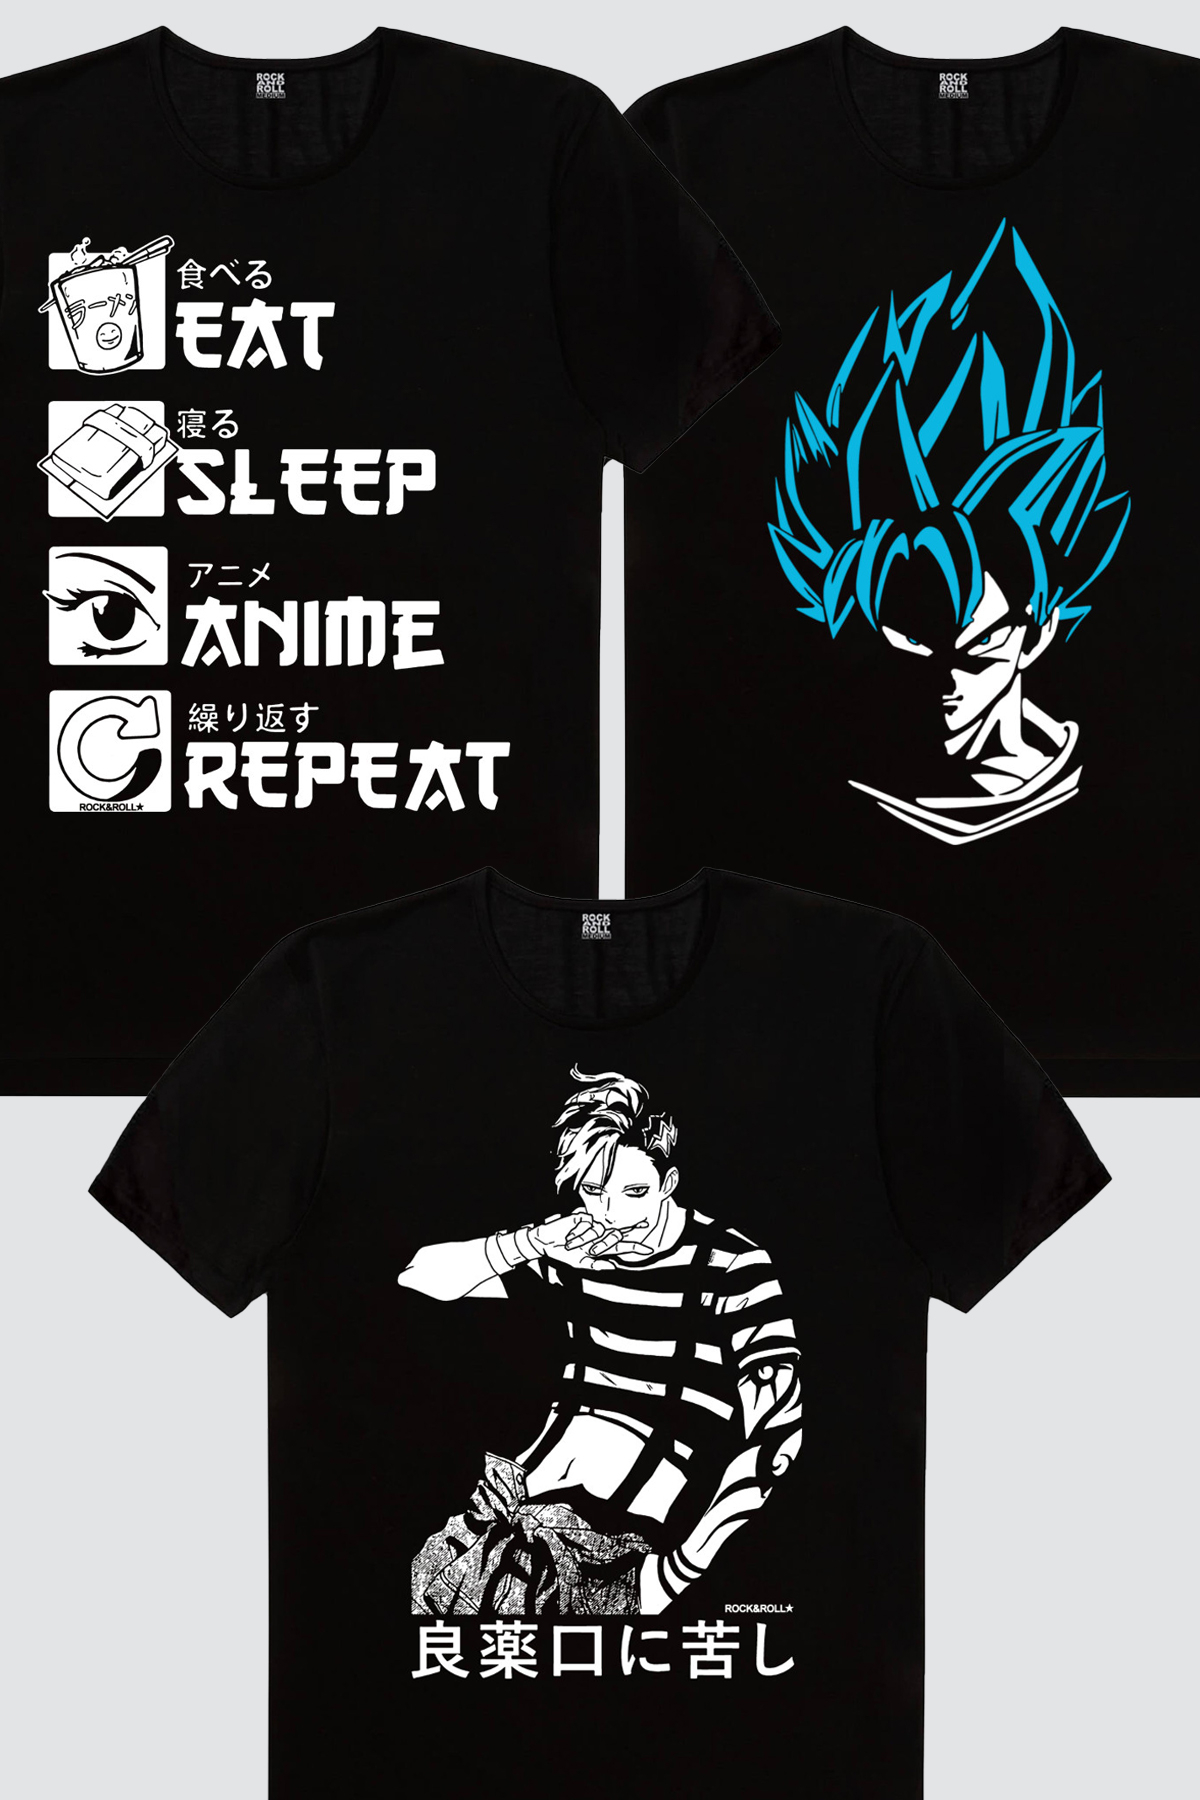 Manga Boy, Mavi Saçlı Kahraman, Hep Anime Erkek 3'lü Eko Paket T-shirt